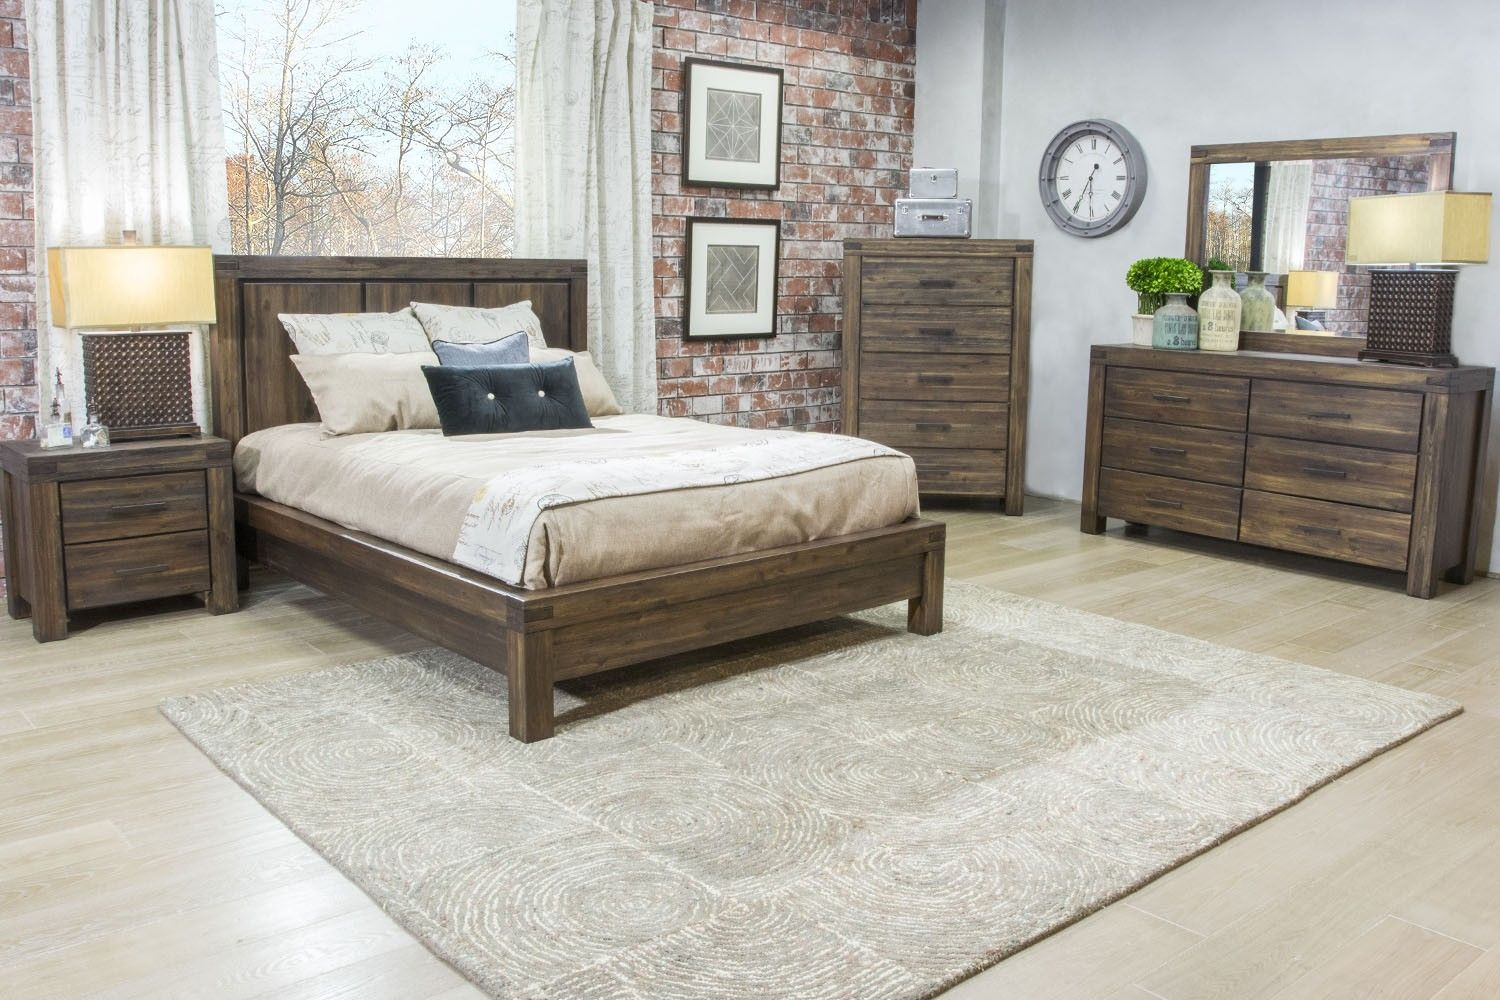 mor furniture diamond bedroom set